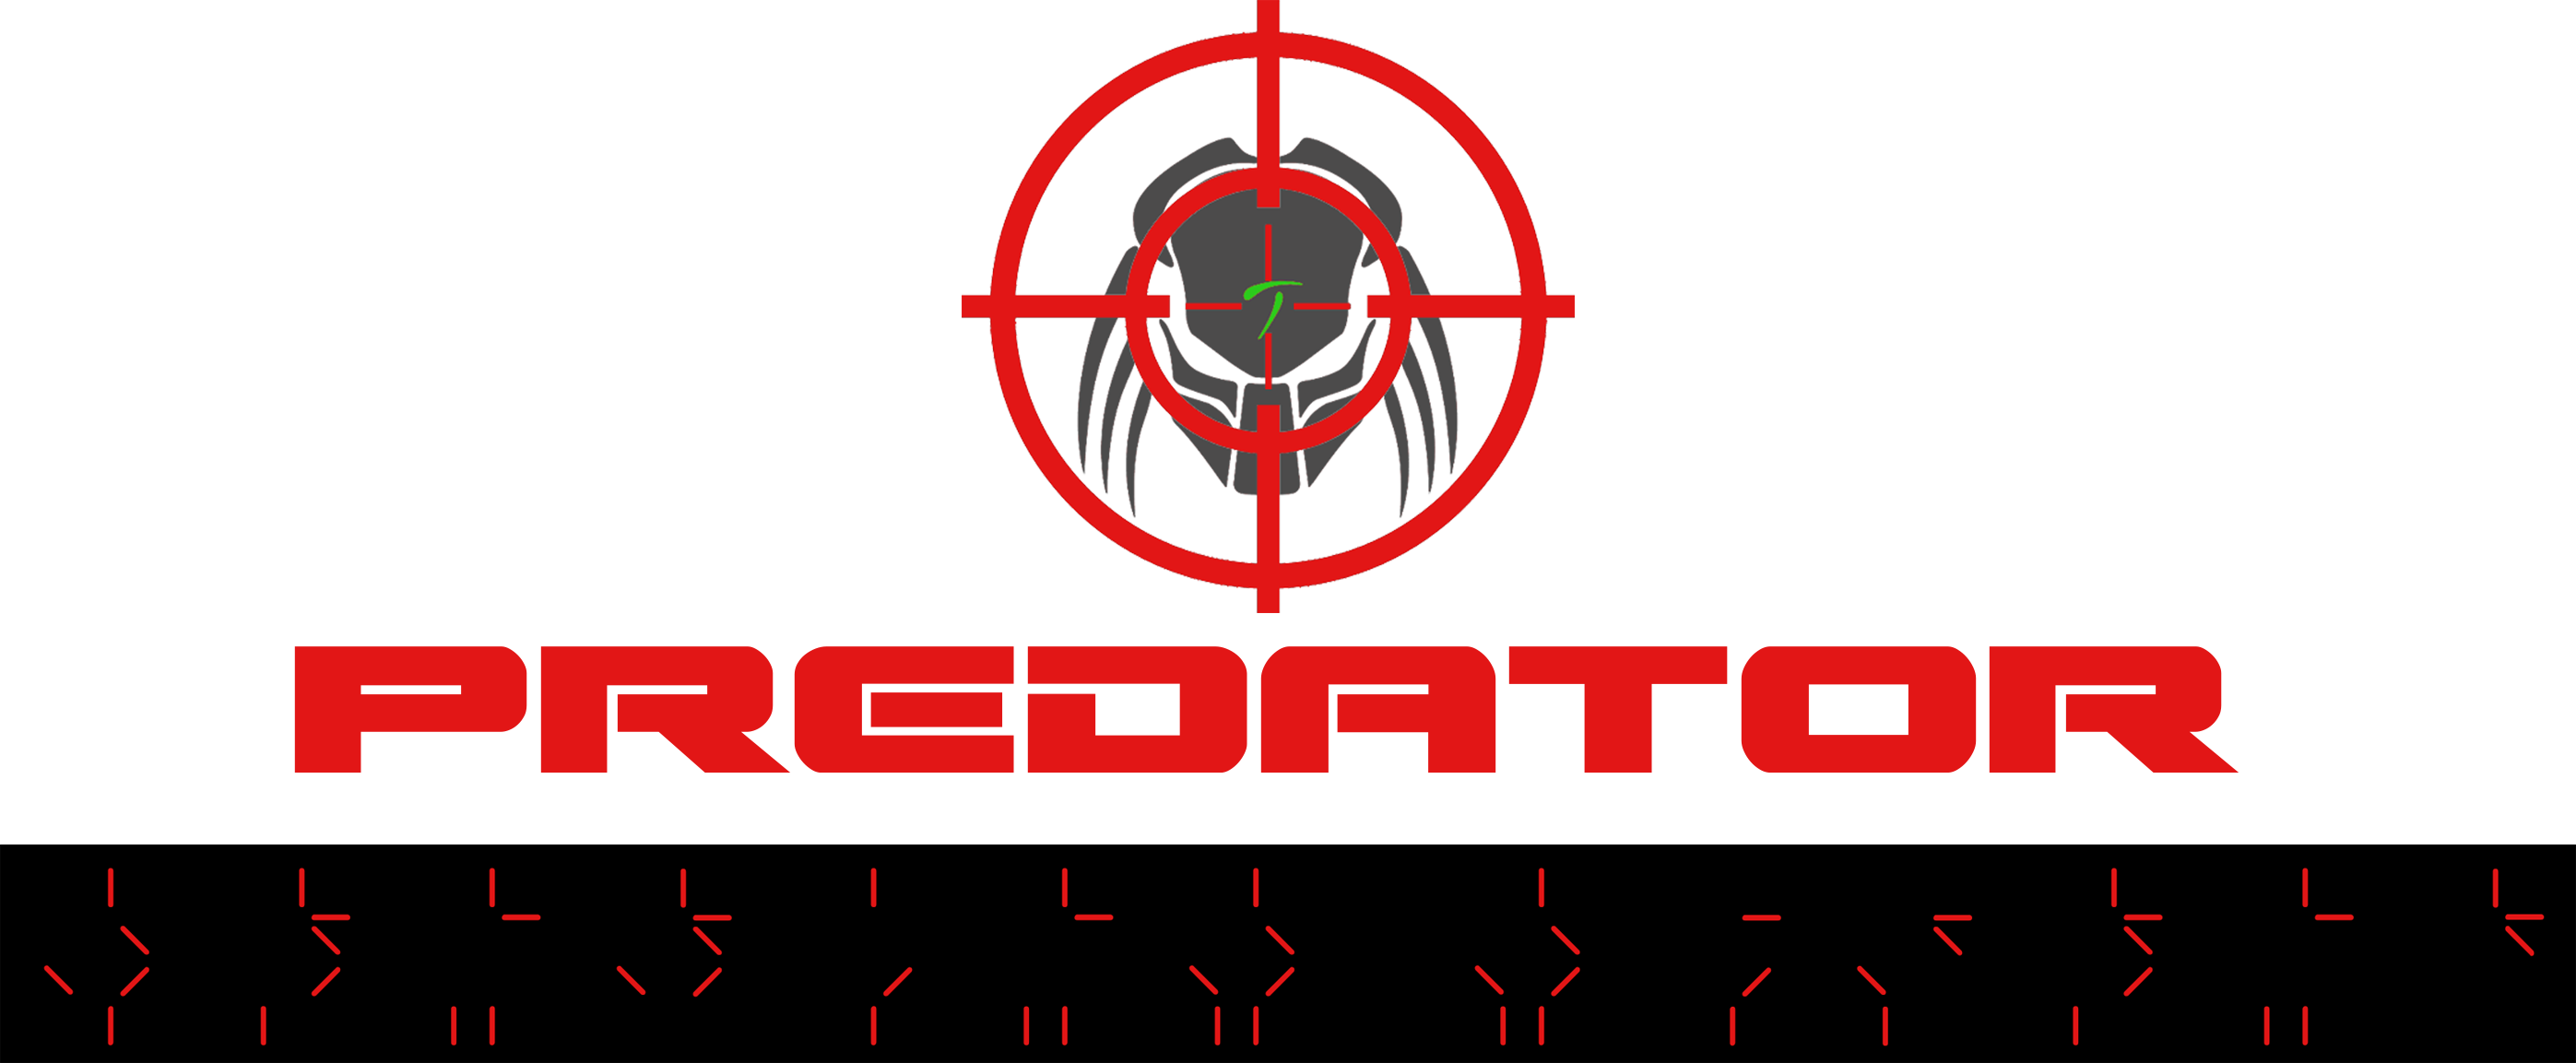 Apex predators logo done by me. : r/titanfall